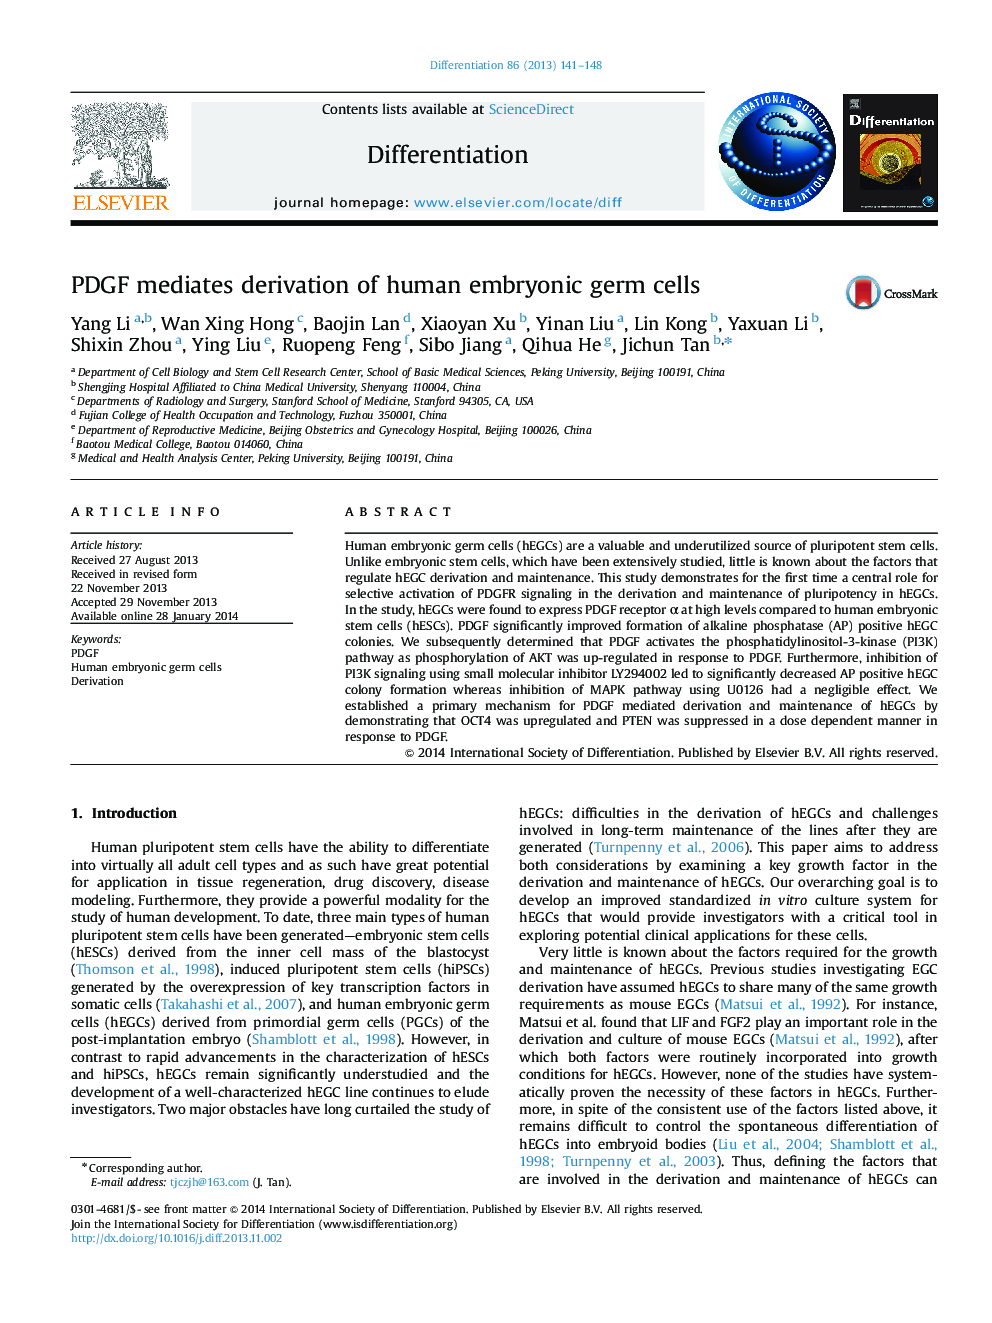 PDGF mediates derivation of human embryonic germ cells